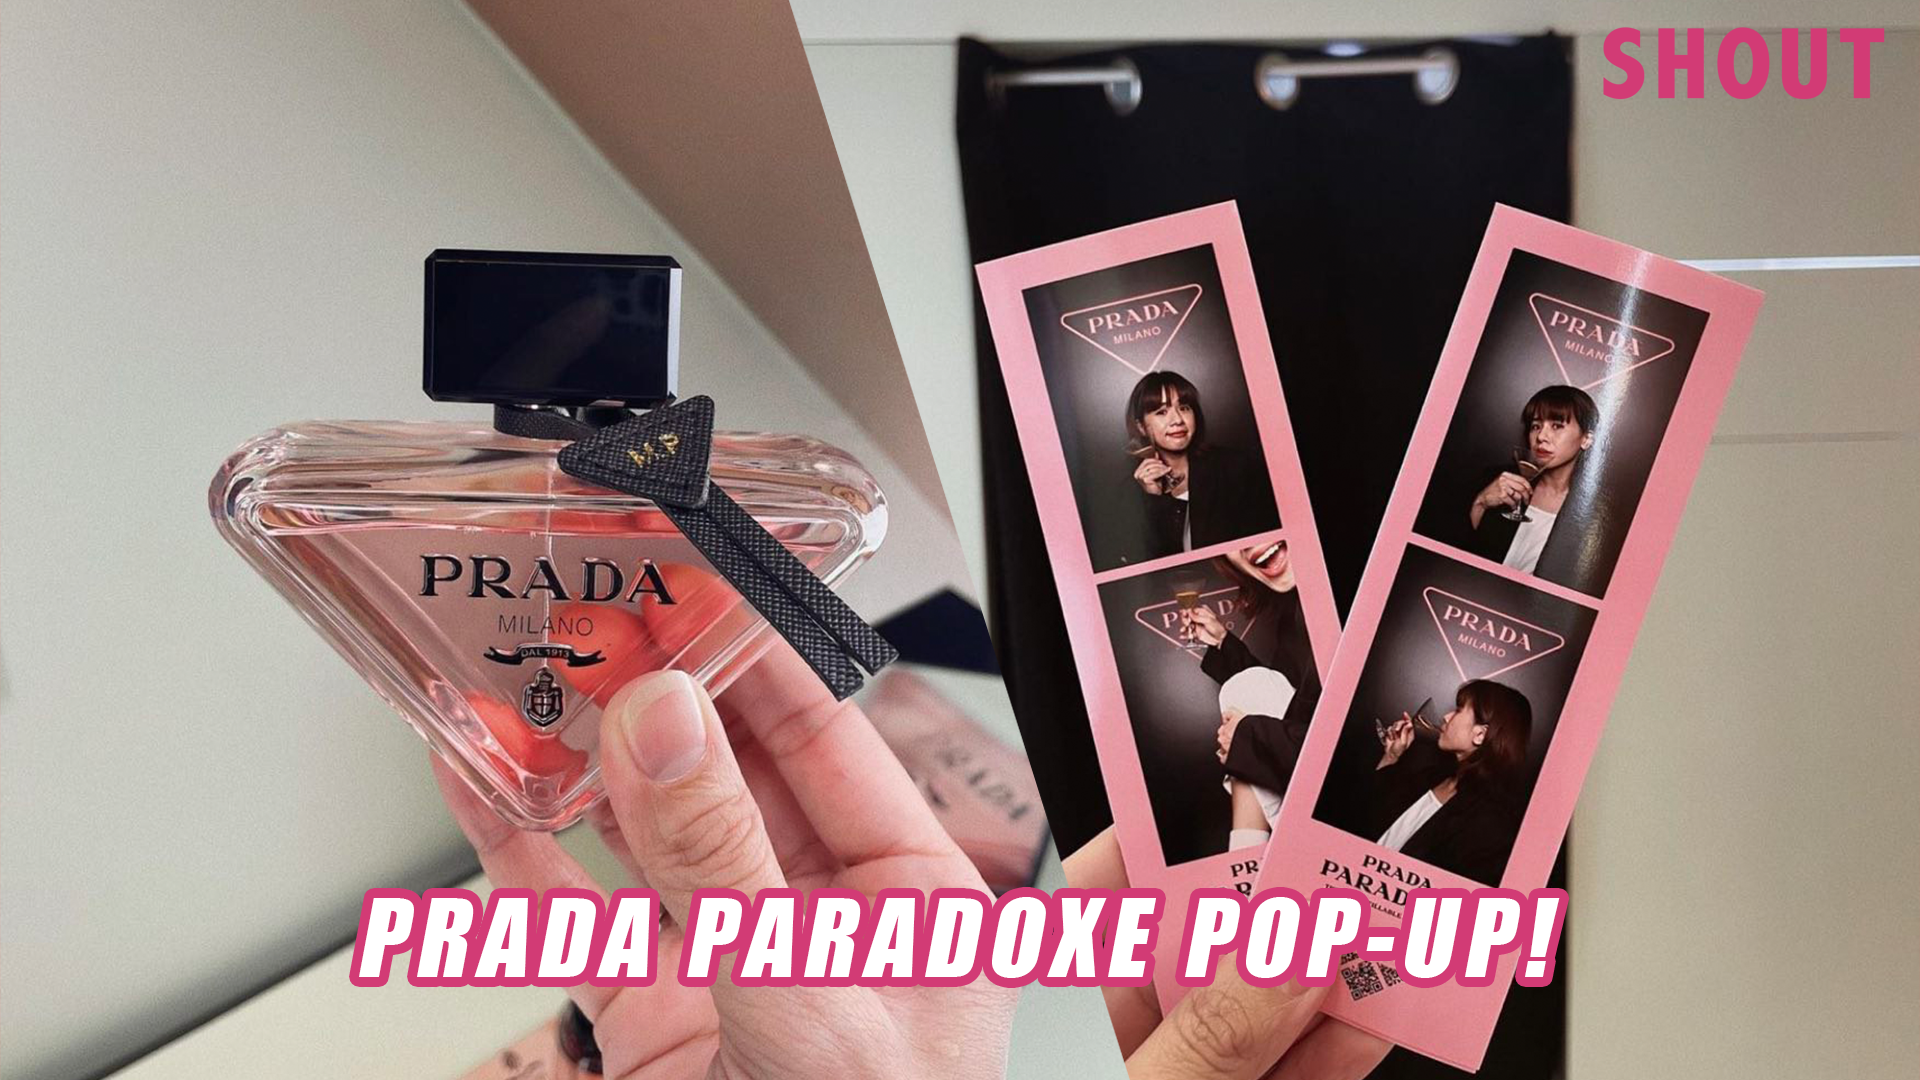 Prada Beauty opens Paradoxe pop-up in Haikou